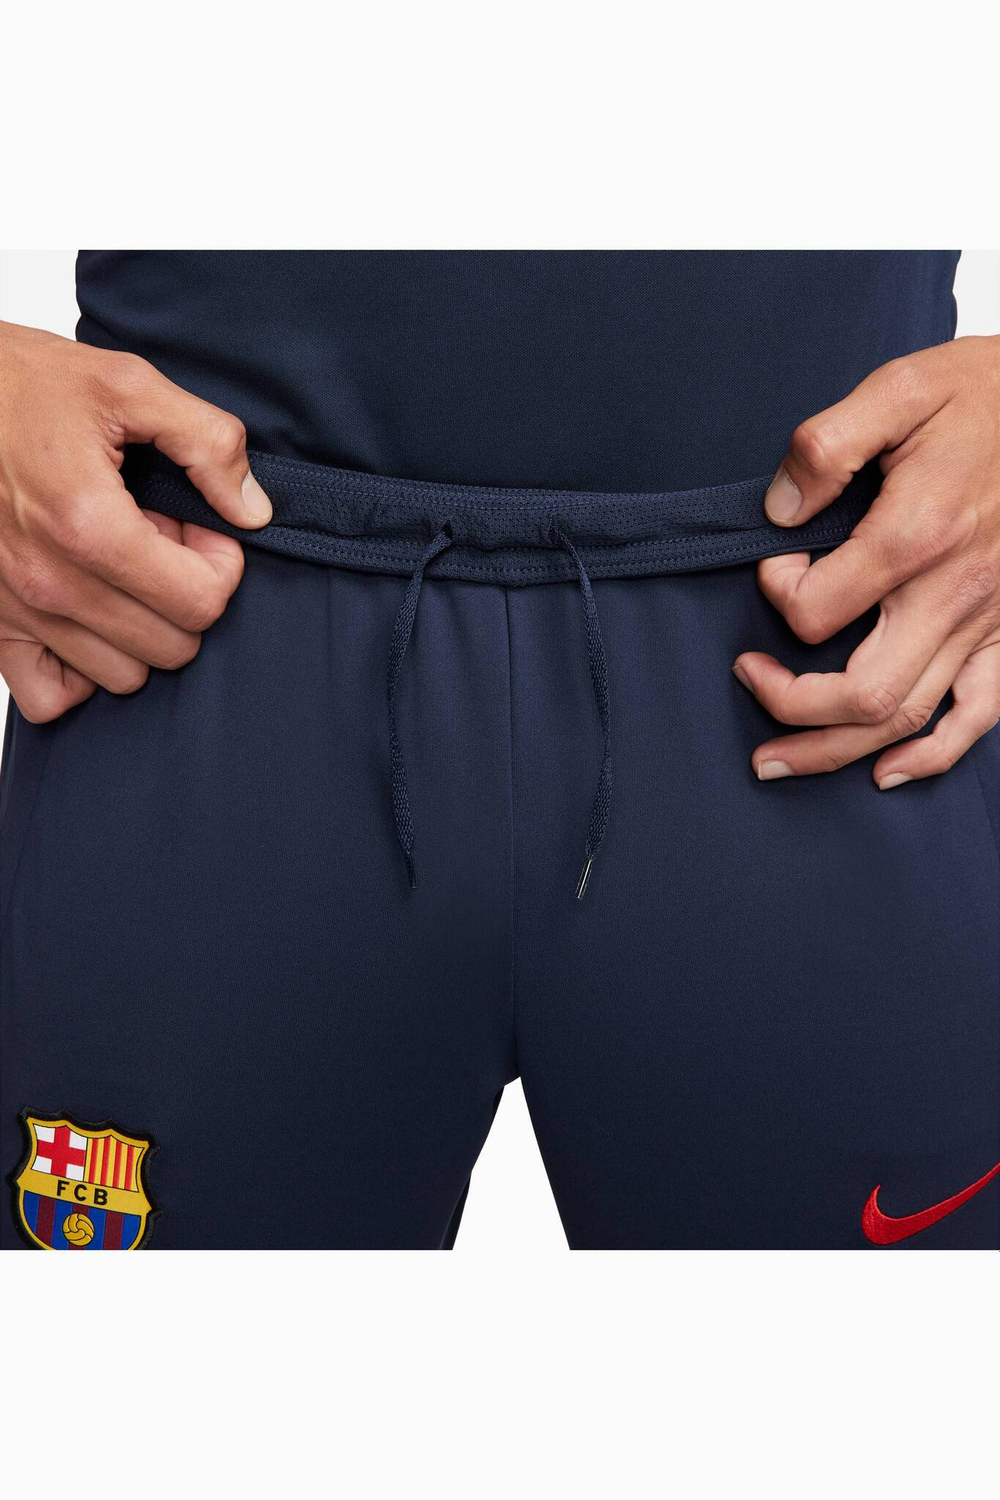 Штаны Nike FC Barcelona 22/23 Dry Strike